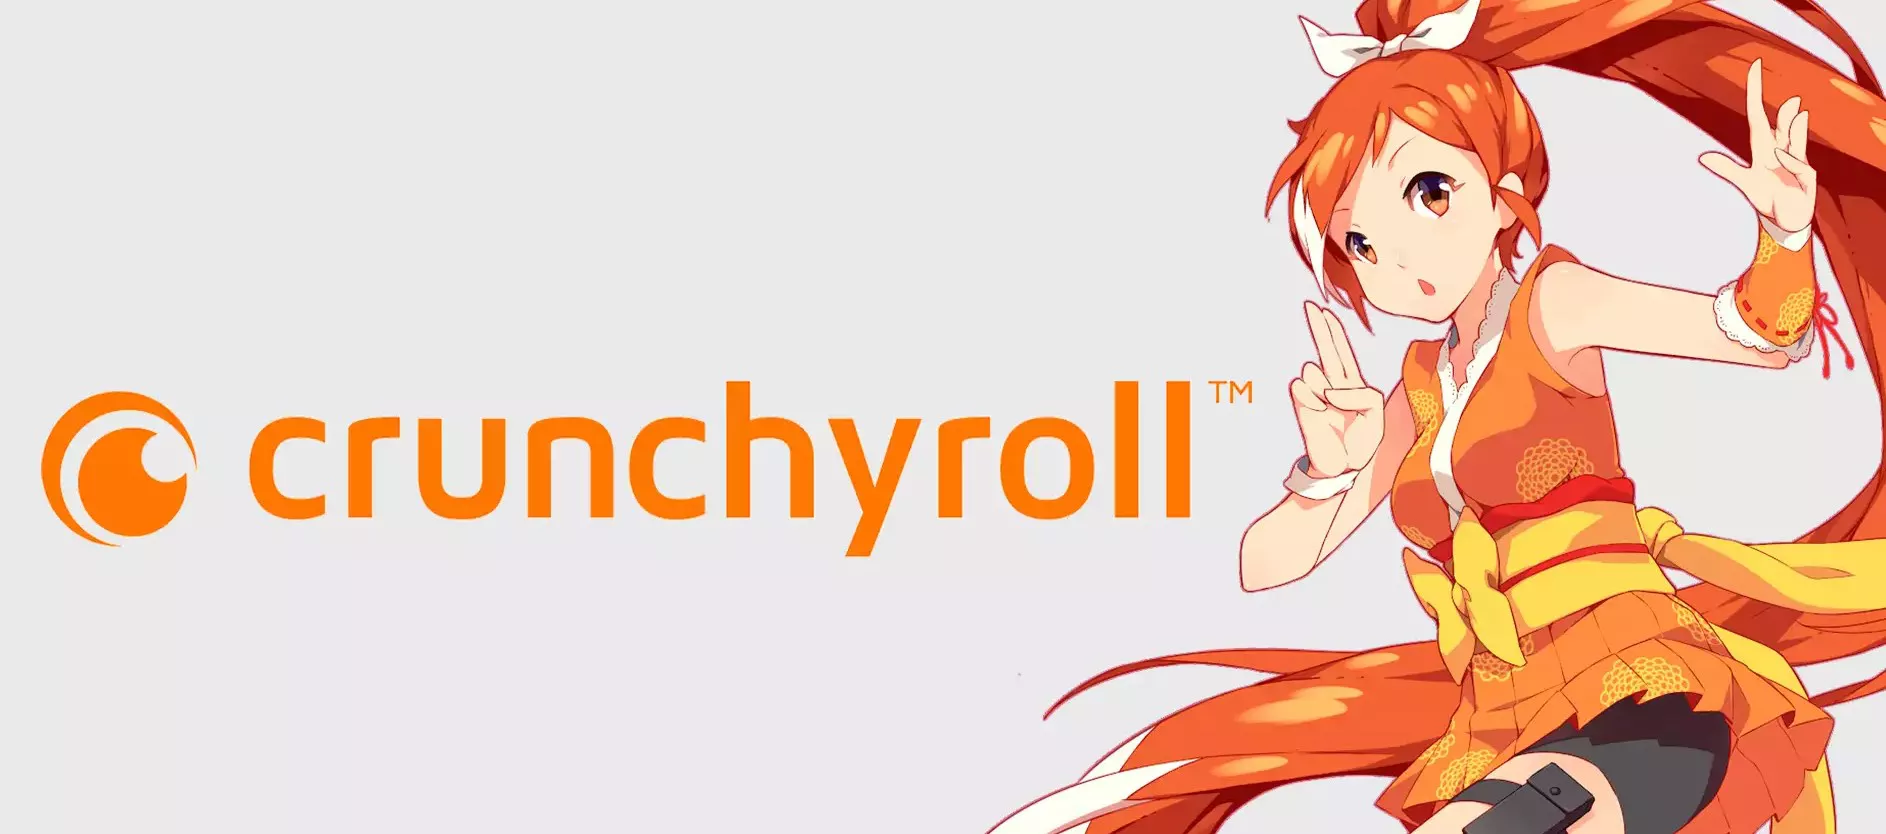 Crunchyroll arriva su Prime Video: migliaia di anime in streaming